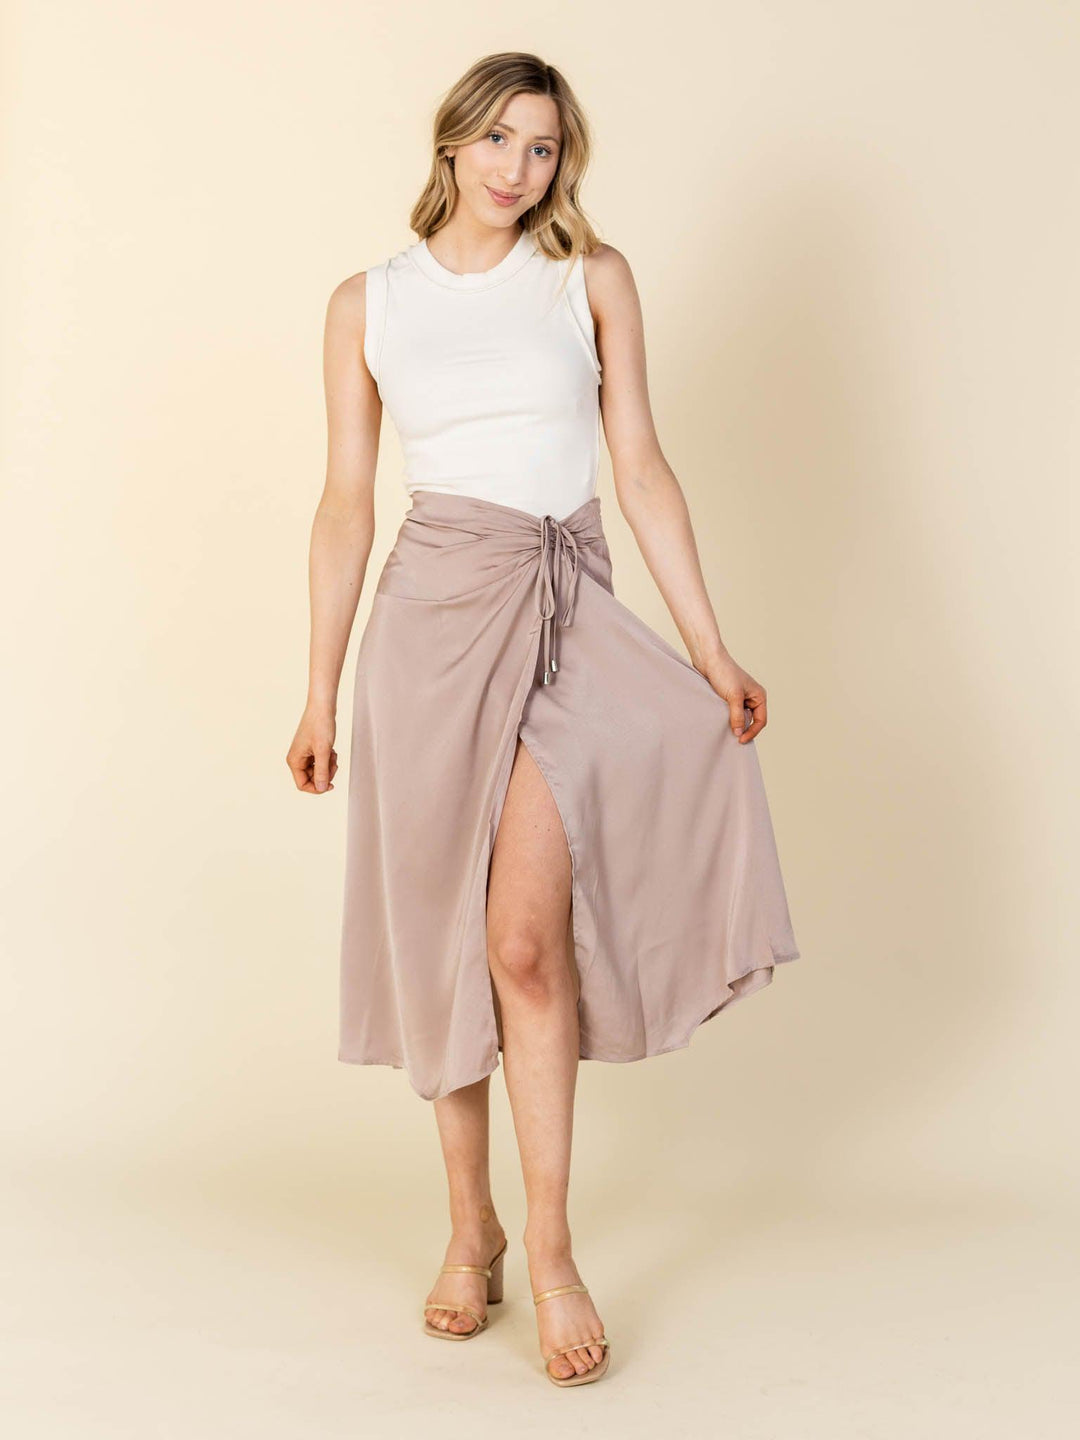 soft neutral satin skirt